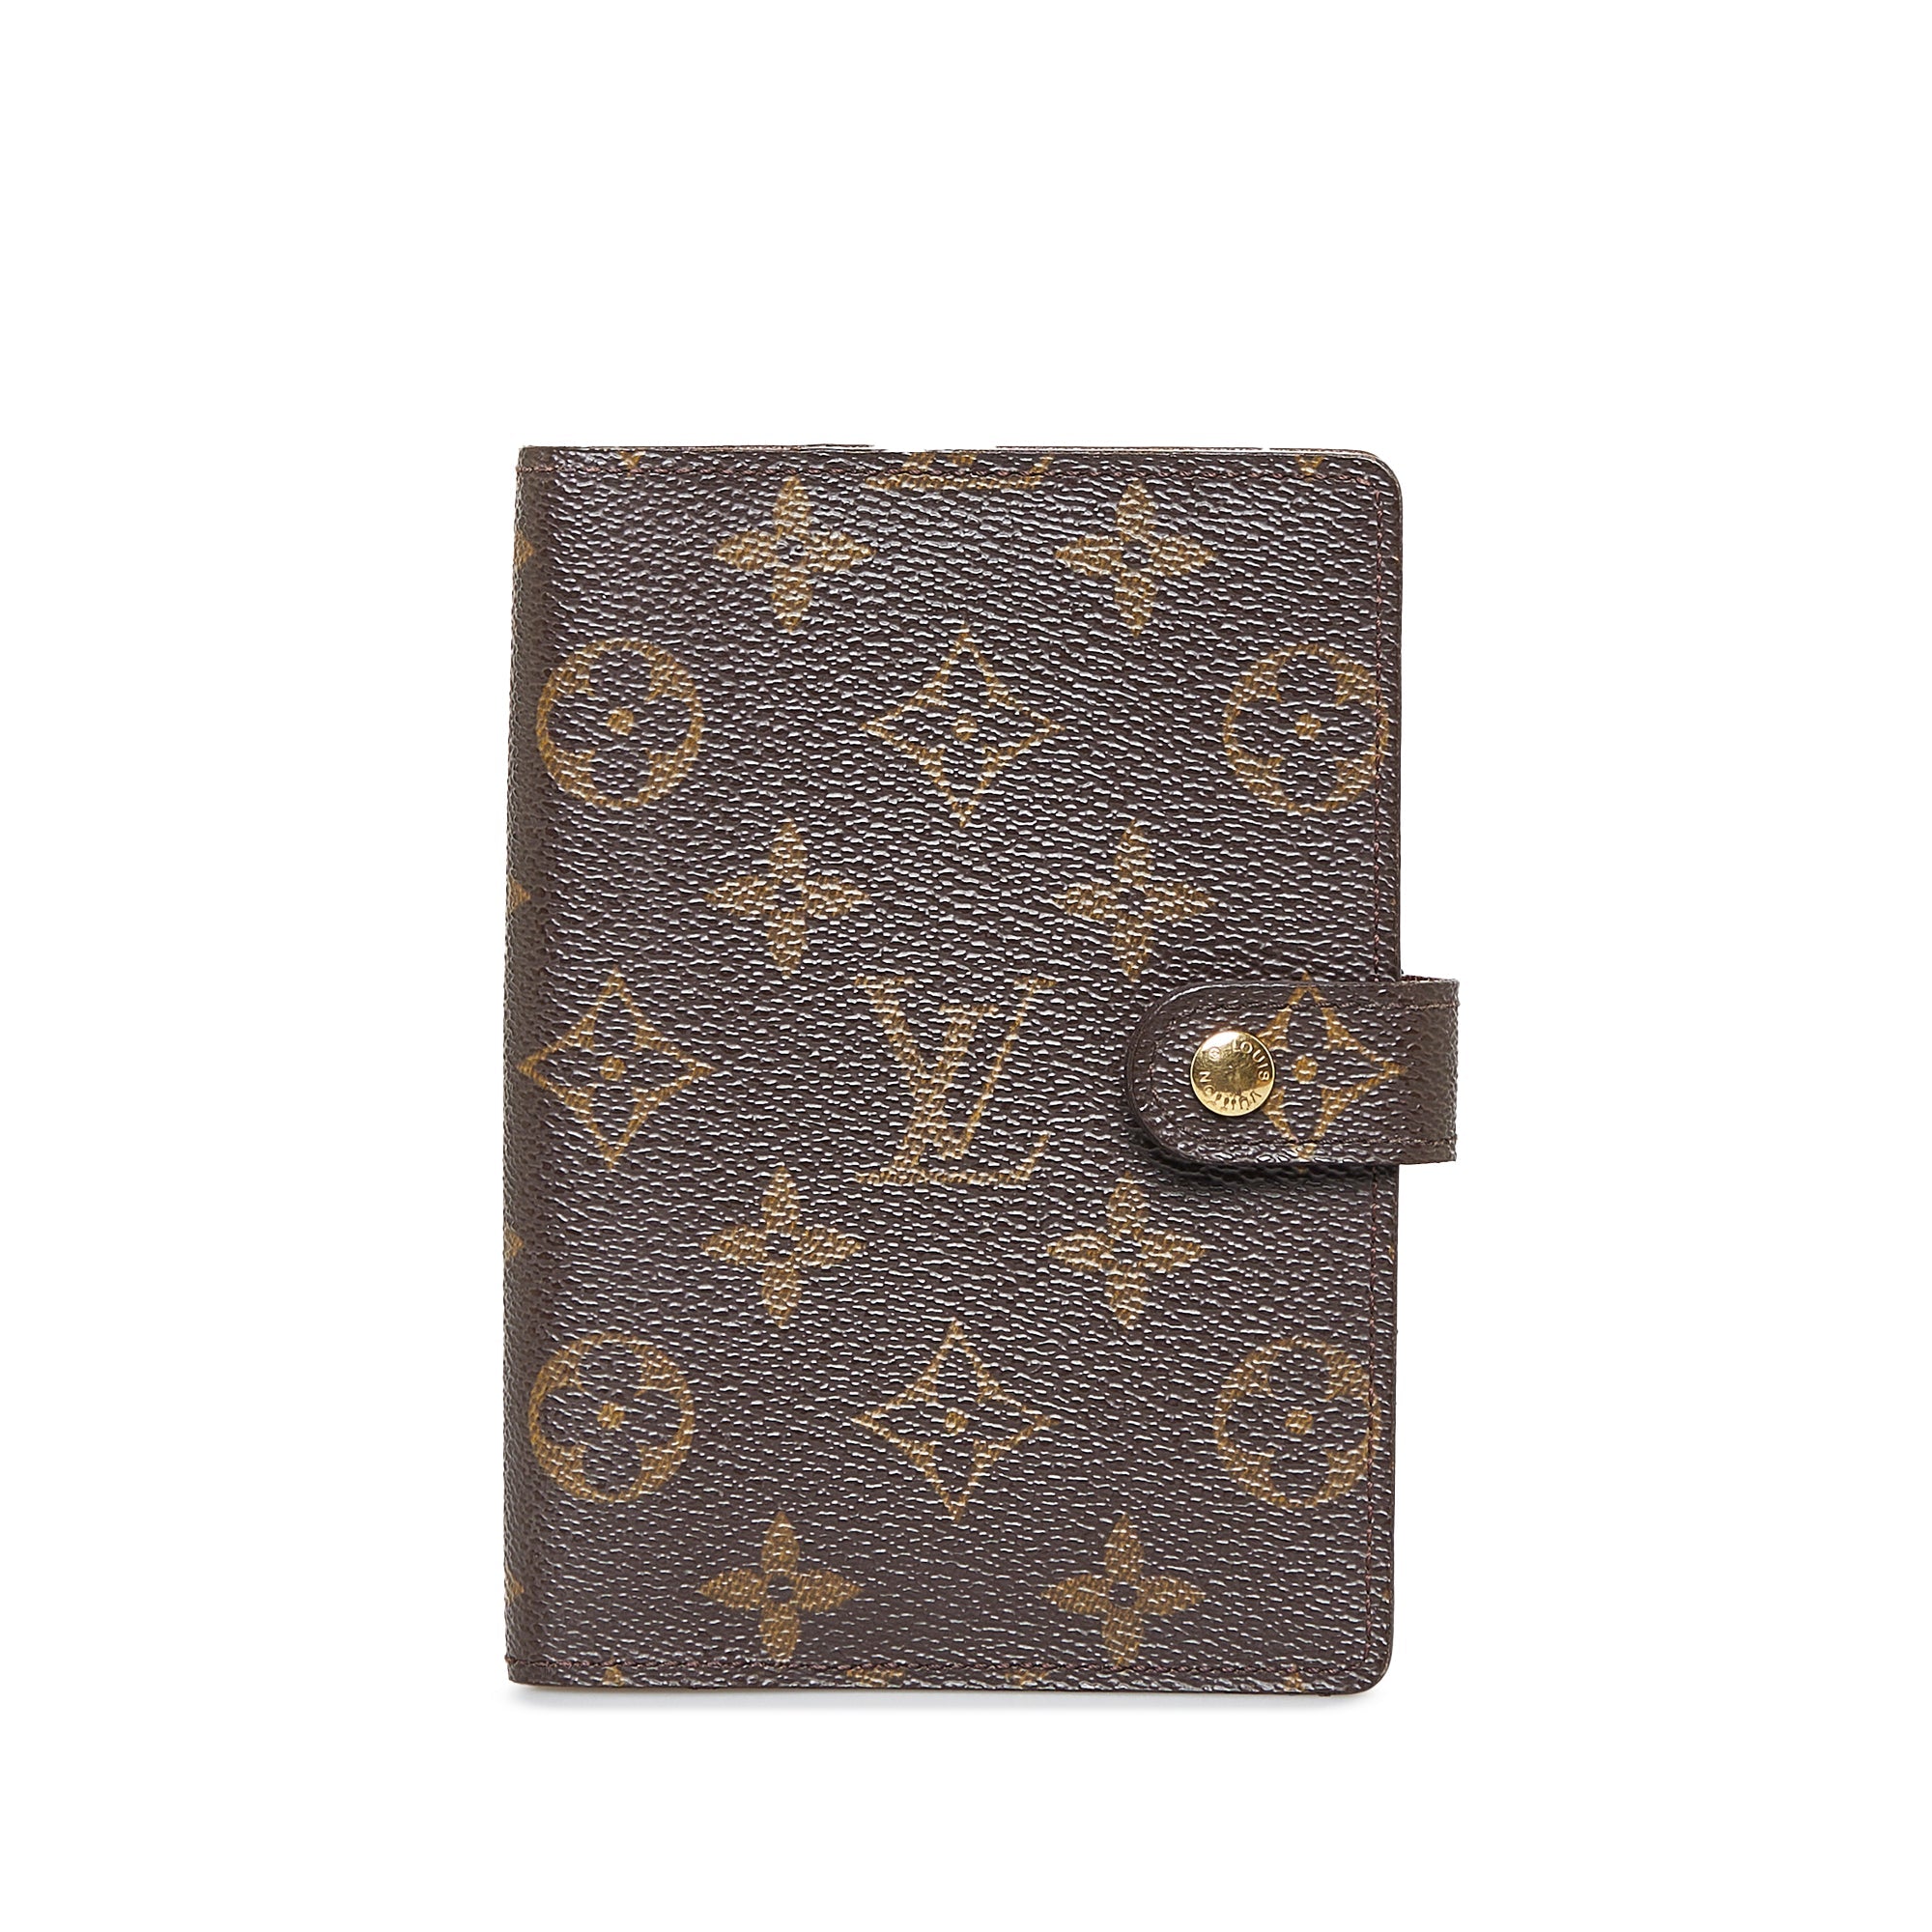 LOUIS VUITTON Louis Vuitton Agenda Cover PM Monogram - Vault 55